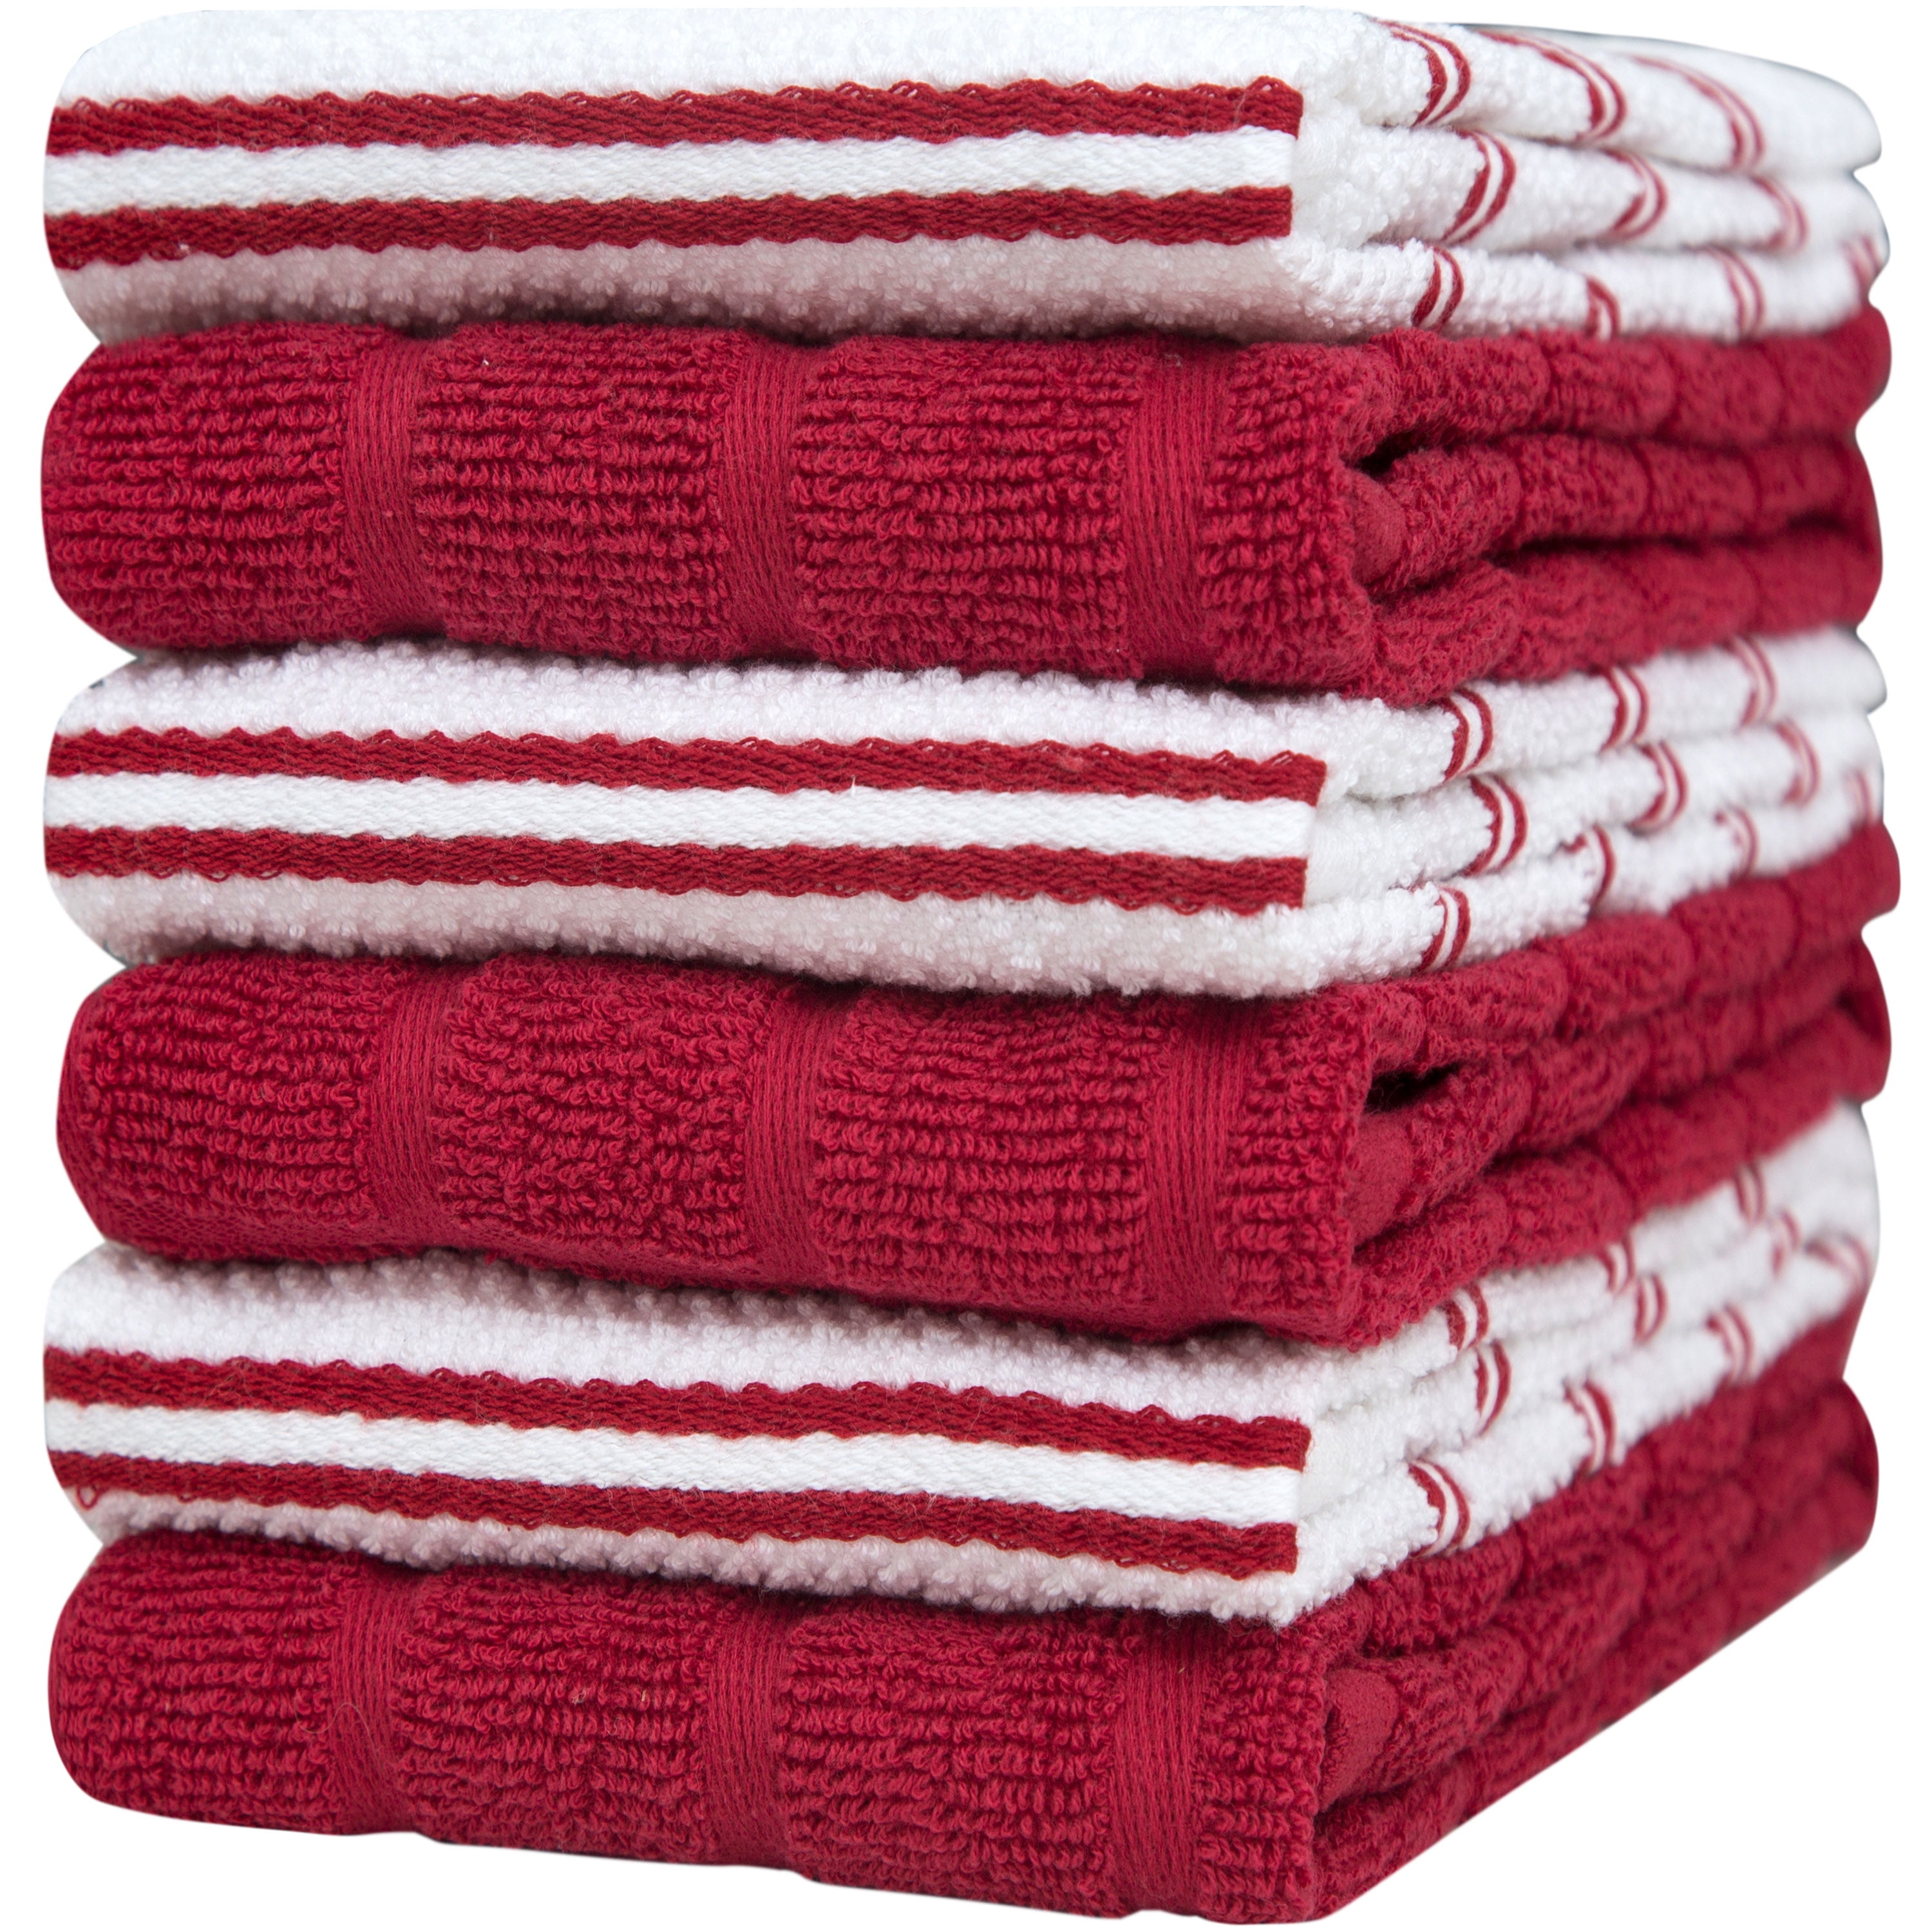 Buy Set of 6 Popcorn Stripe Kitchen Towel at Bumble Towels